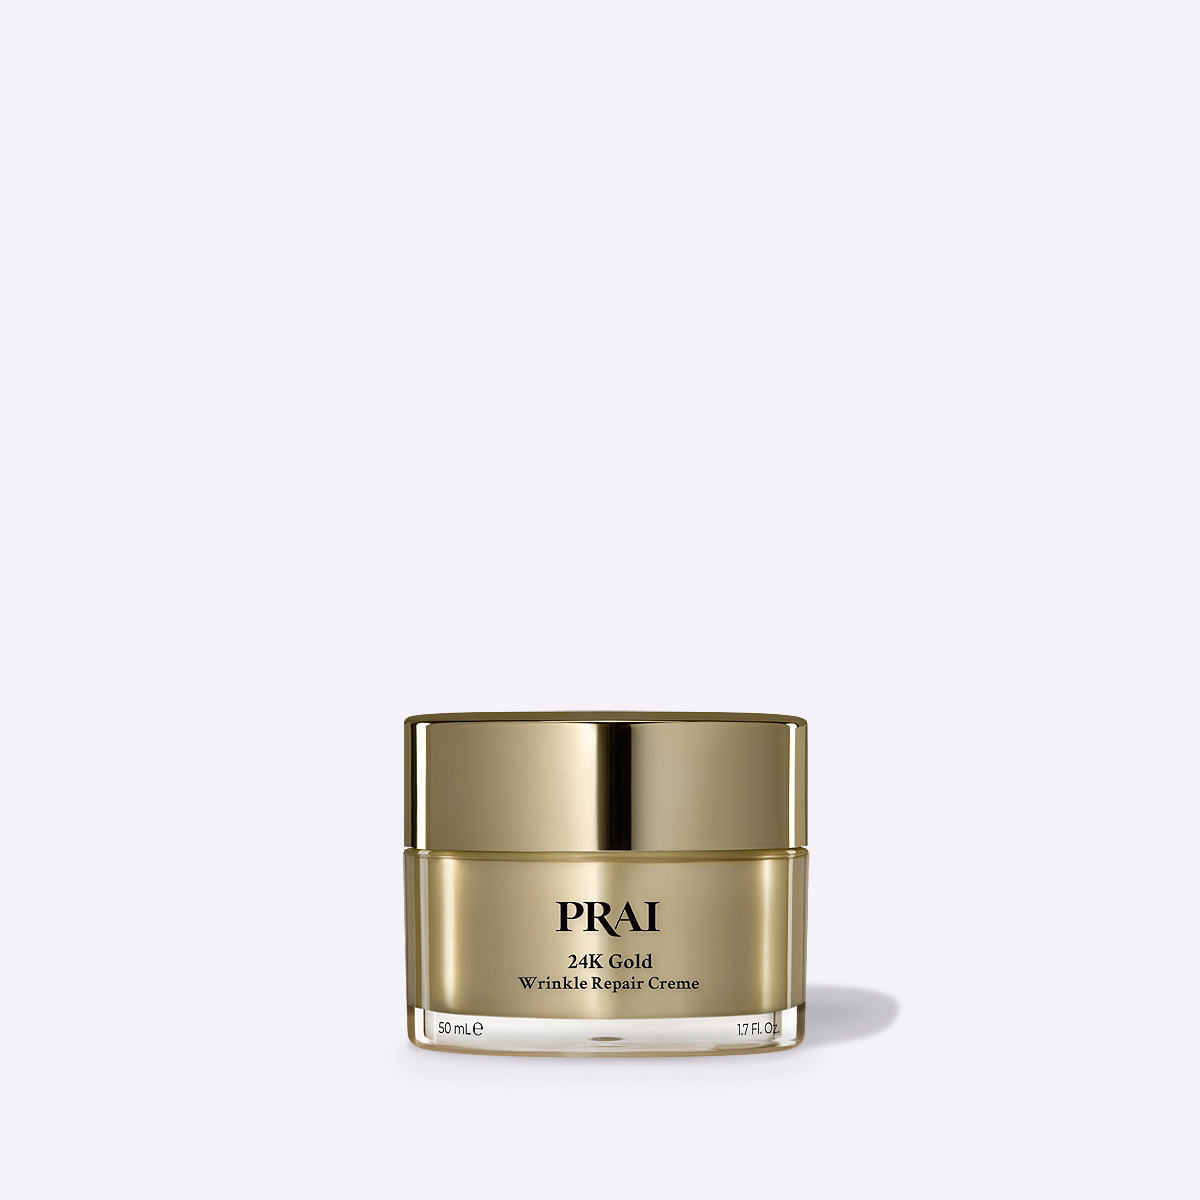 PRAI Beauty 24K Gold Wrinkle Repair Creme